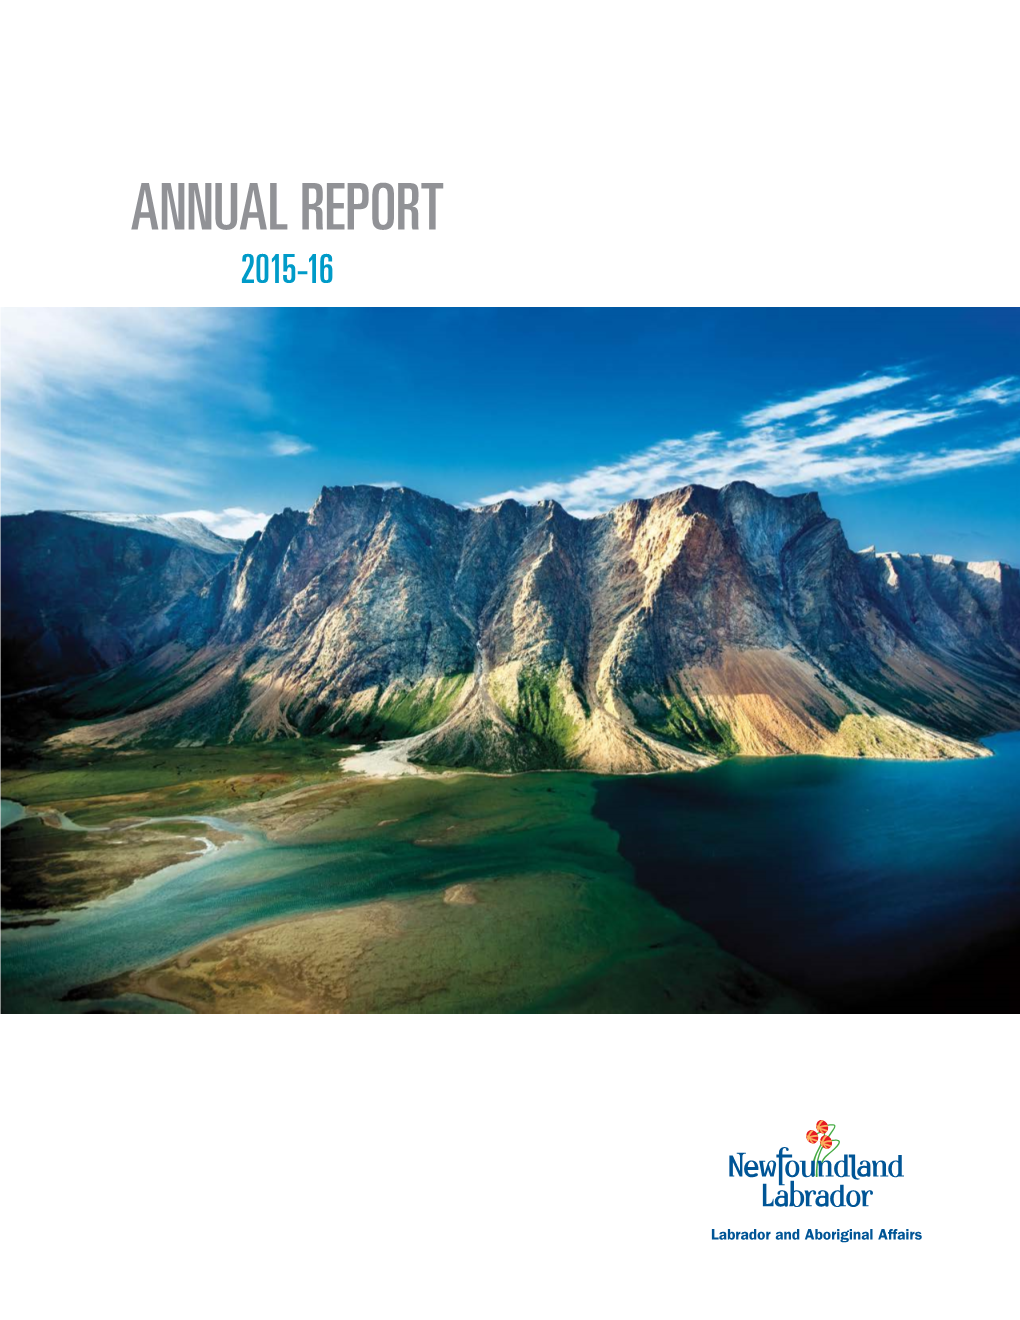 Labrador and Aboriginal Affairs Office – 2015-16 Annual Report